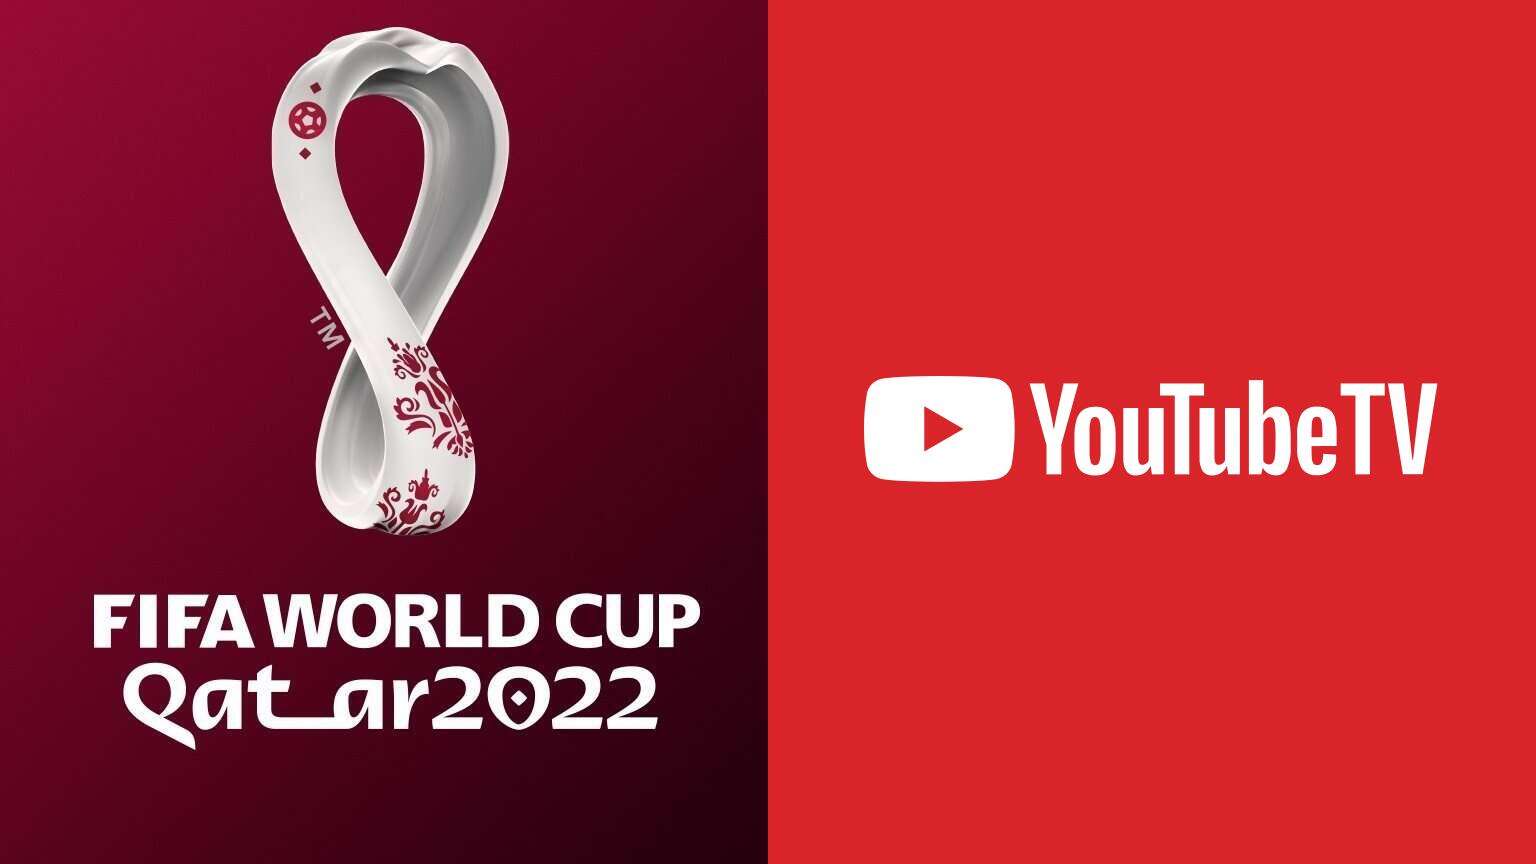 fifa world cup logo youtube tv